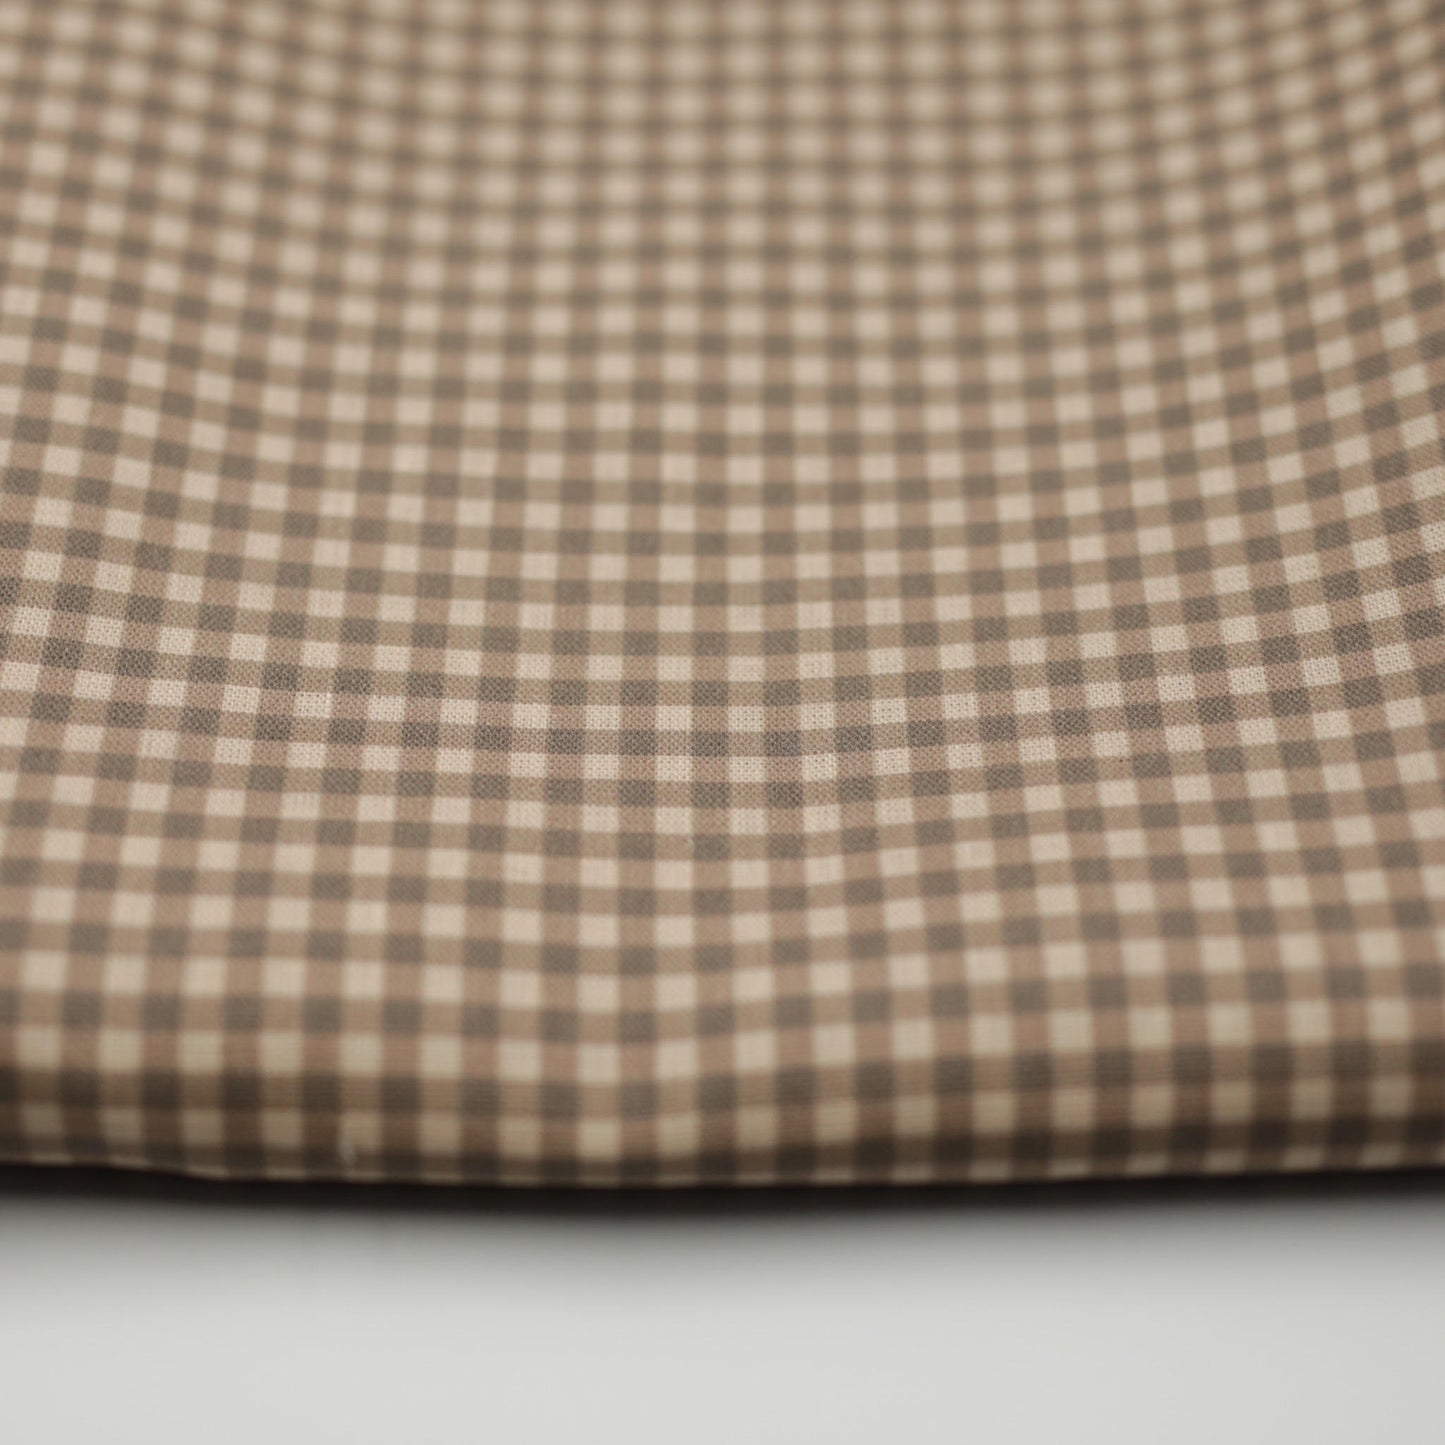 Mocha gingham 0.5 cm 100% linen fabric